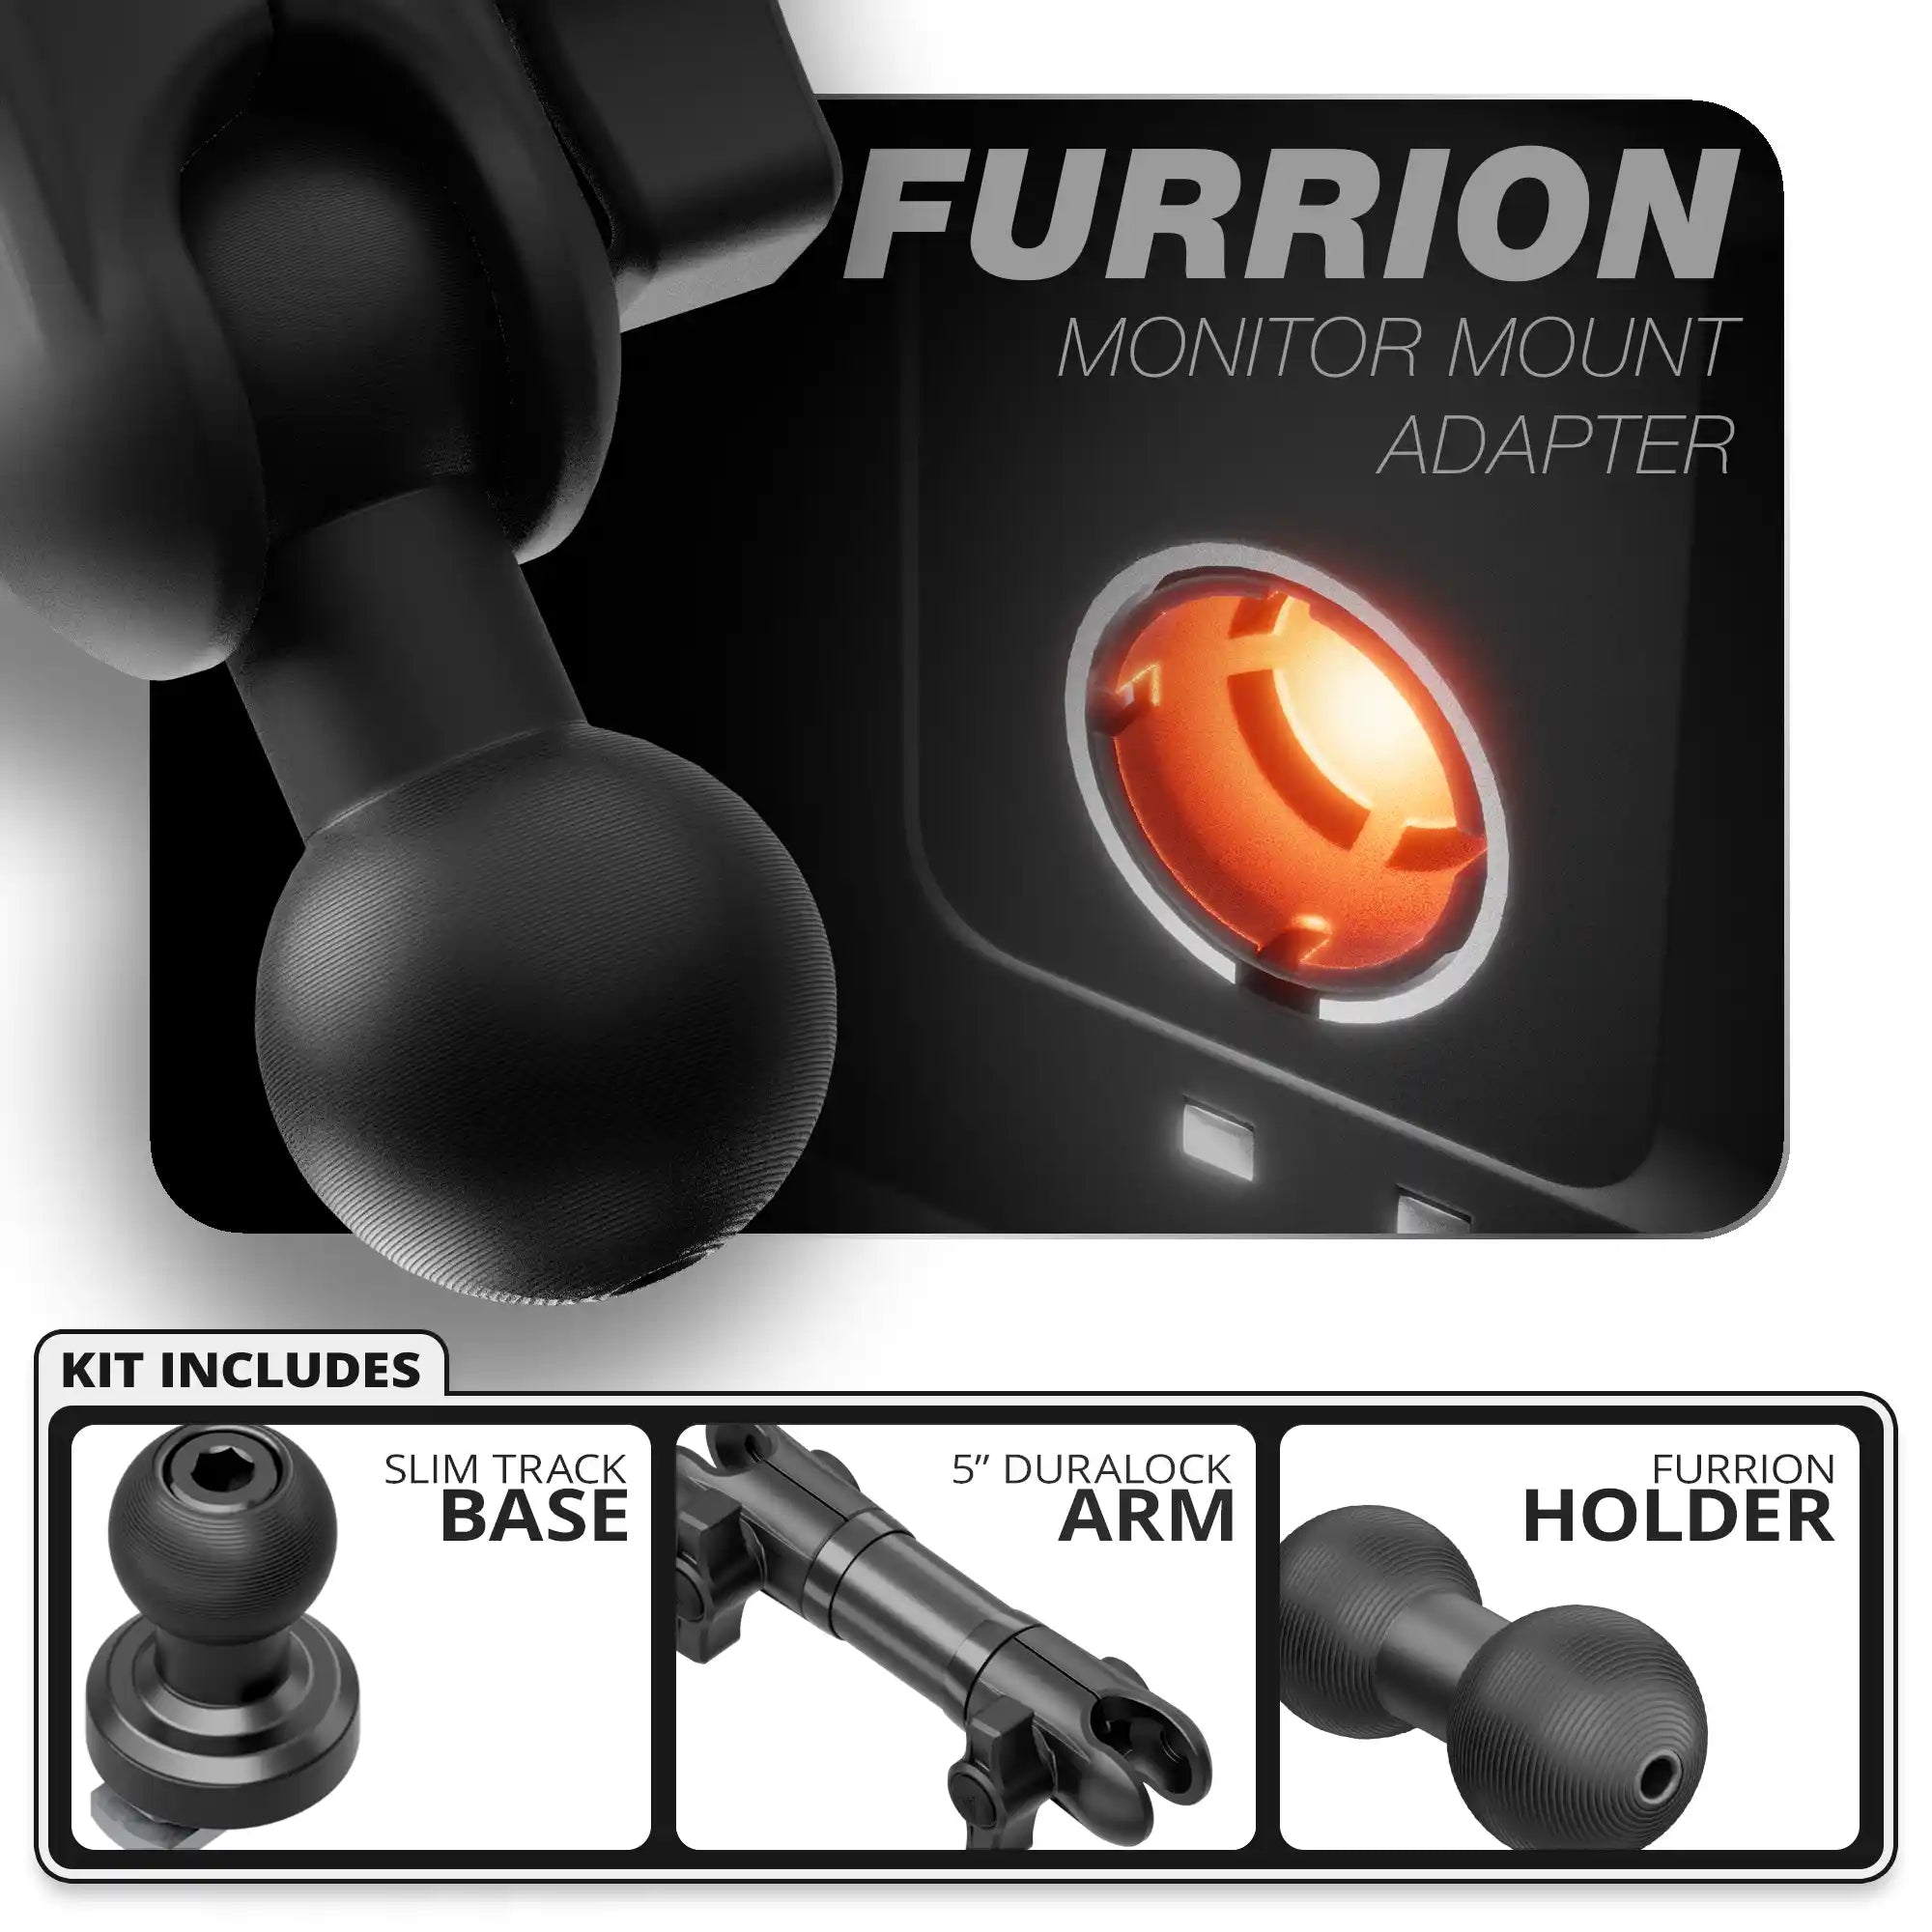 Furrion | Slim Track Base | 5" DuraLock Arm